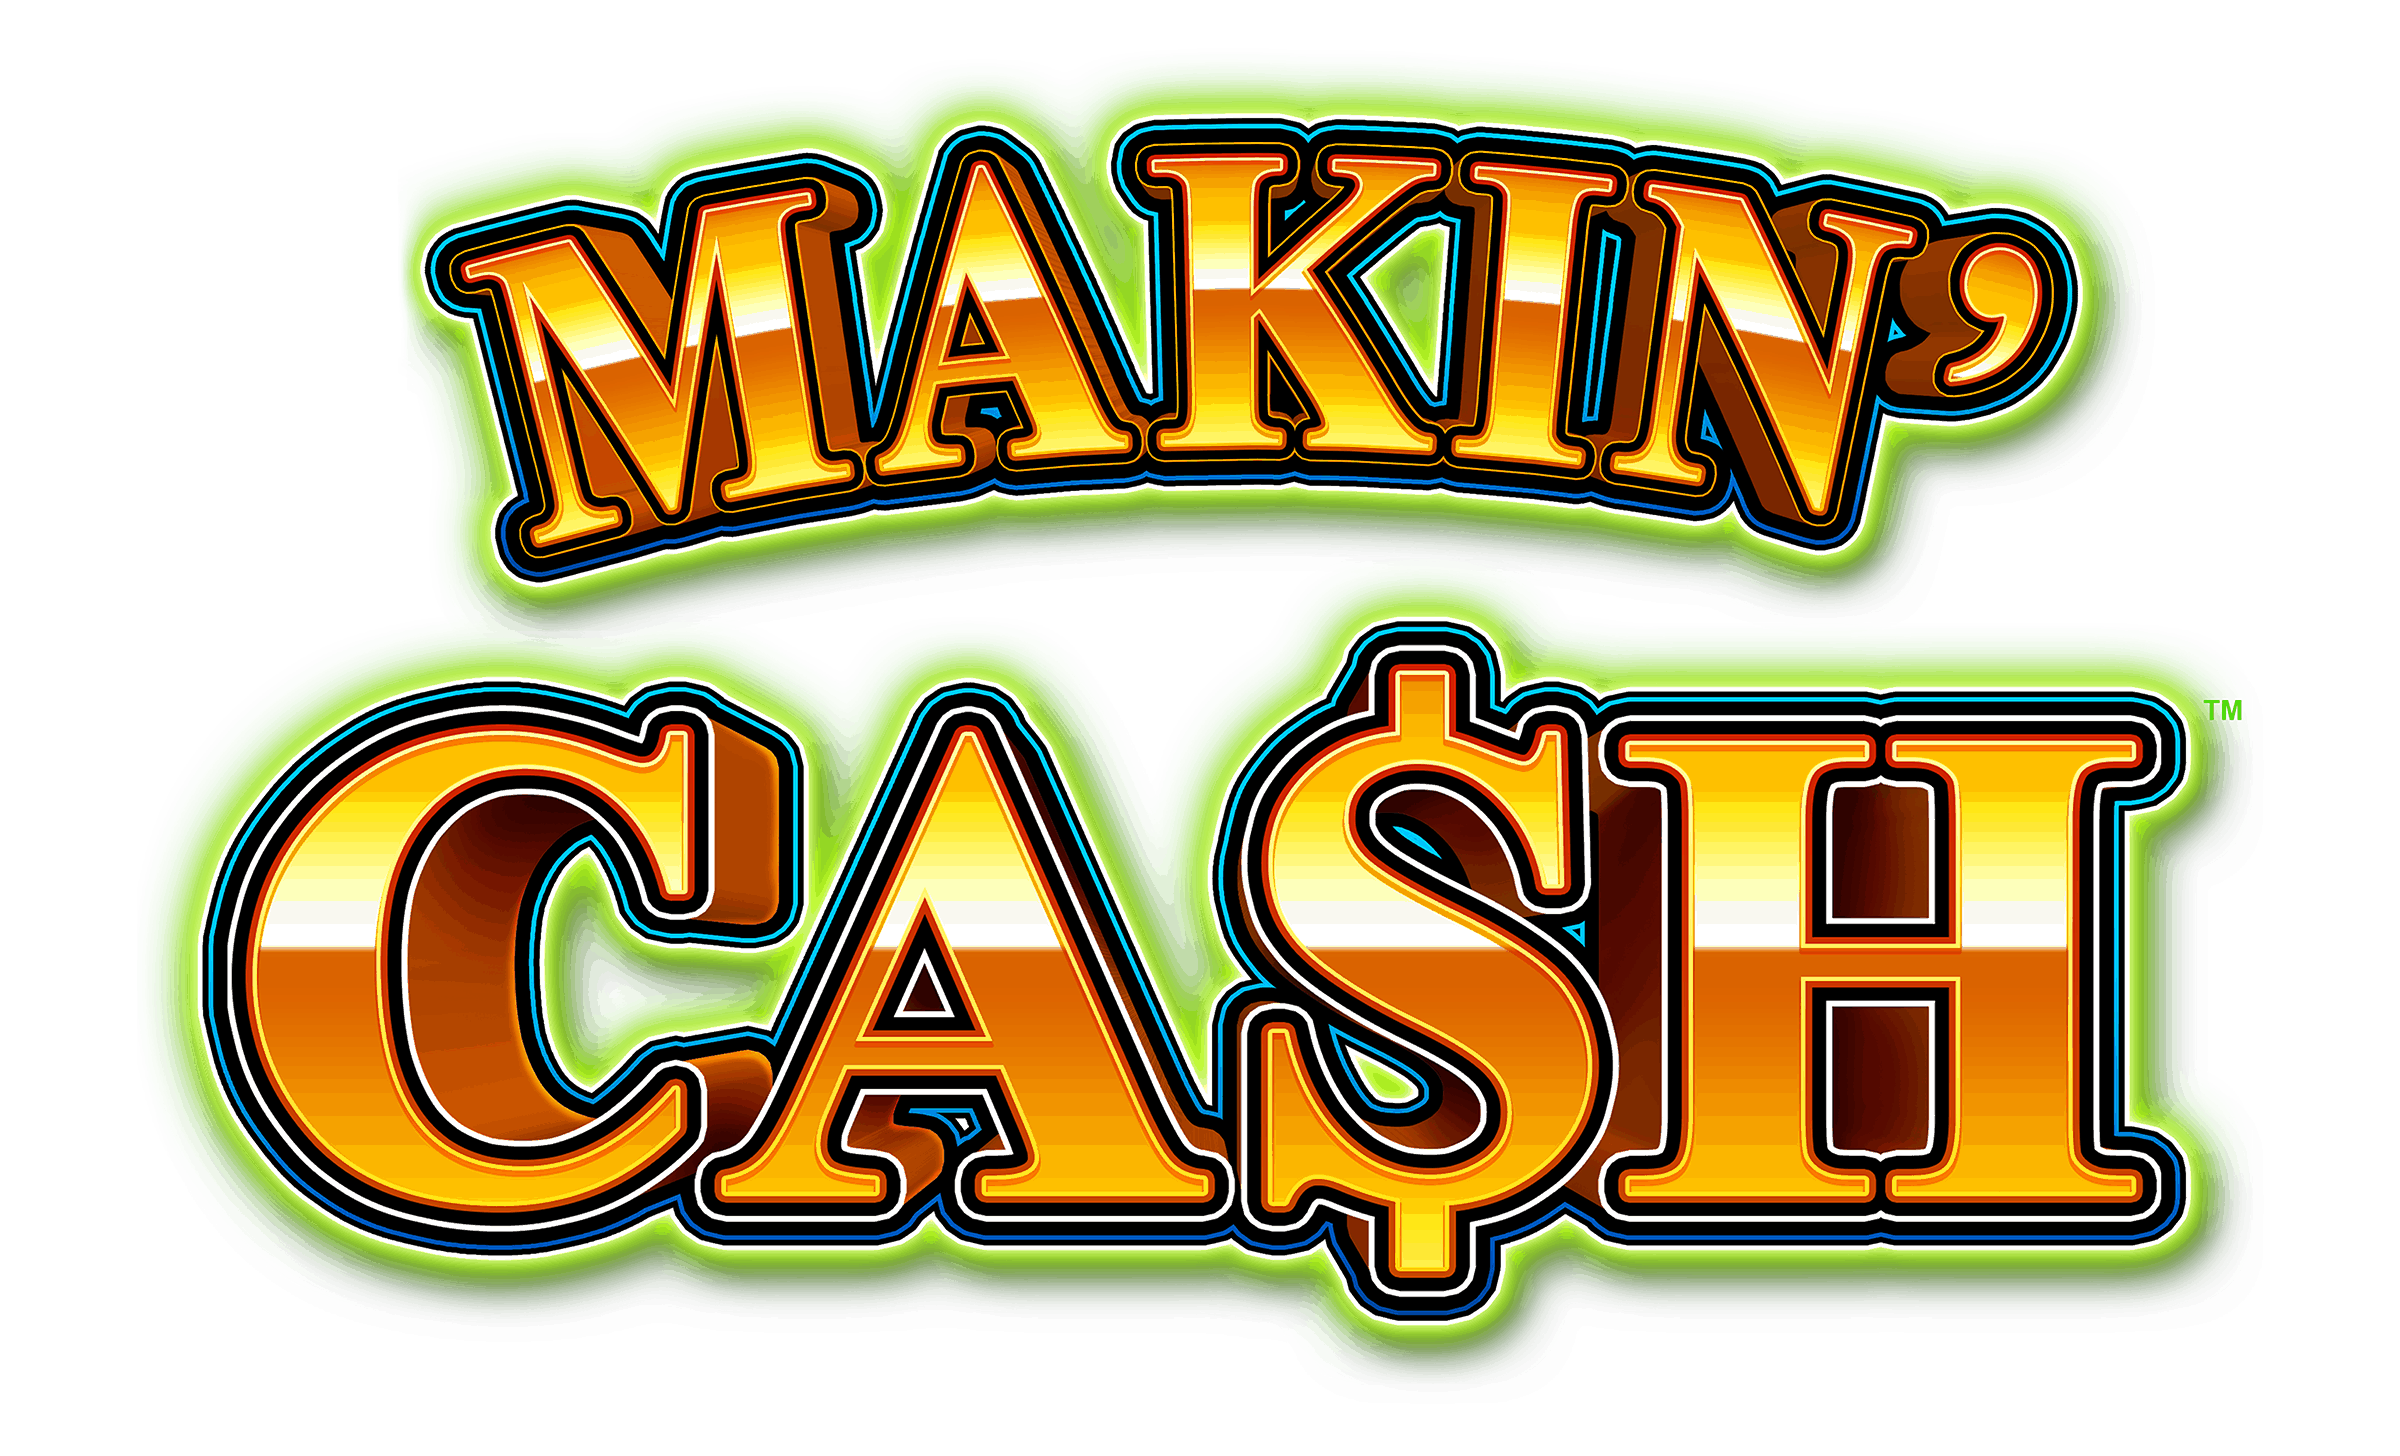 Coyote Cash Slot Machine